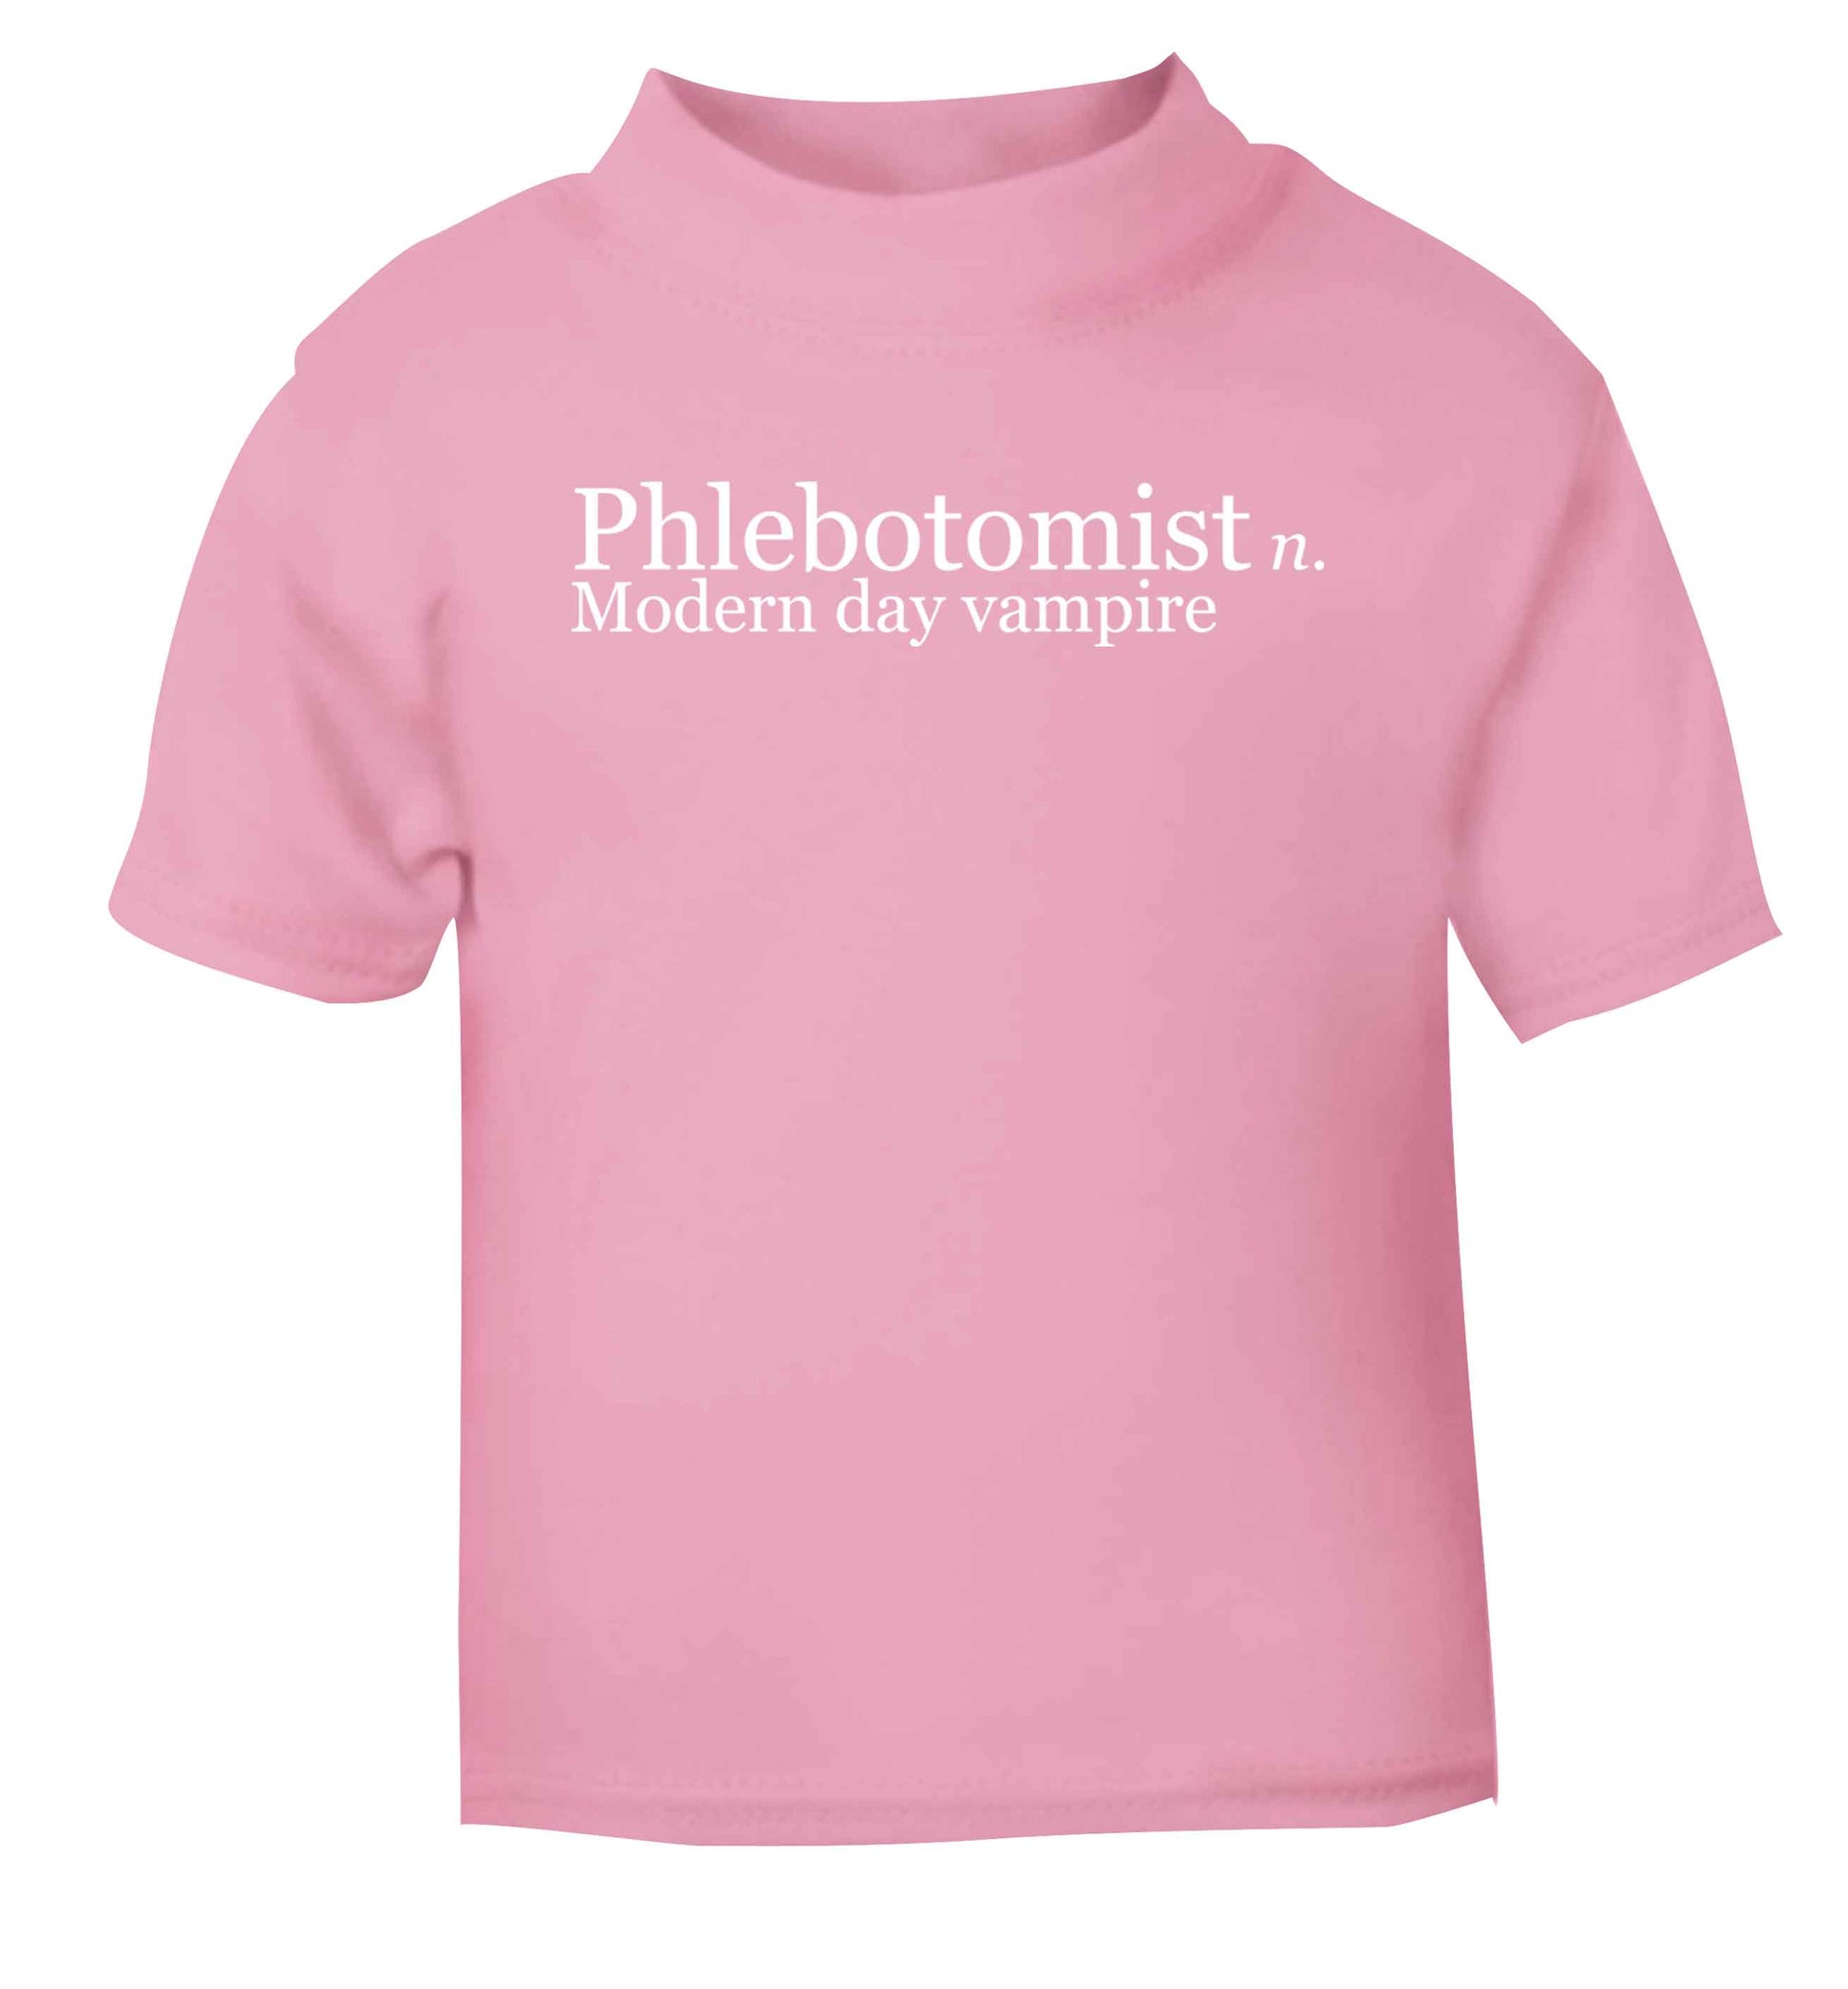 Phlebotomist - Modern day vampire light pink baby toddler Tshirt 2 Years